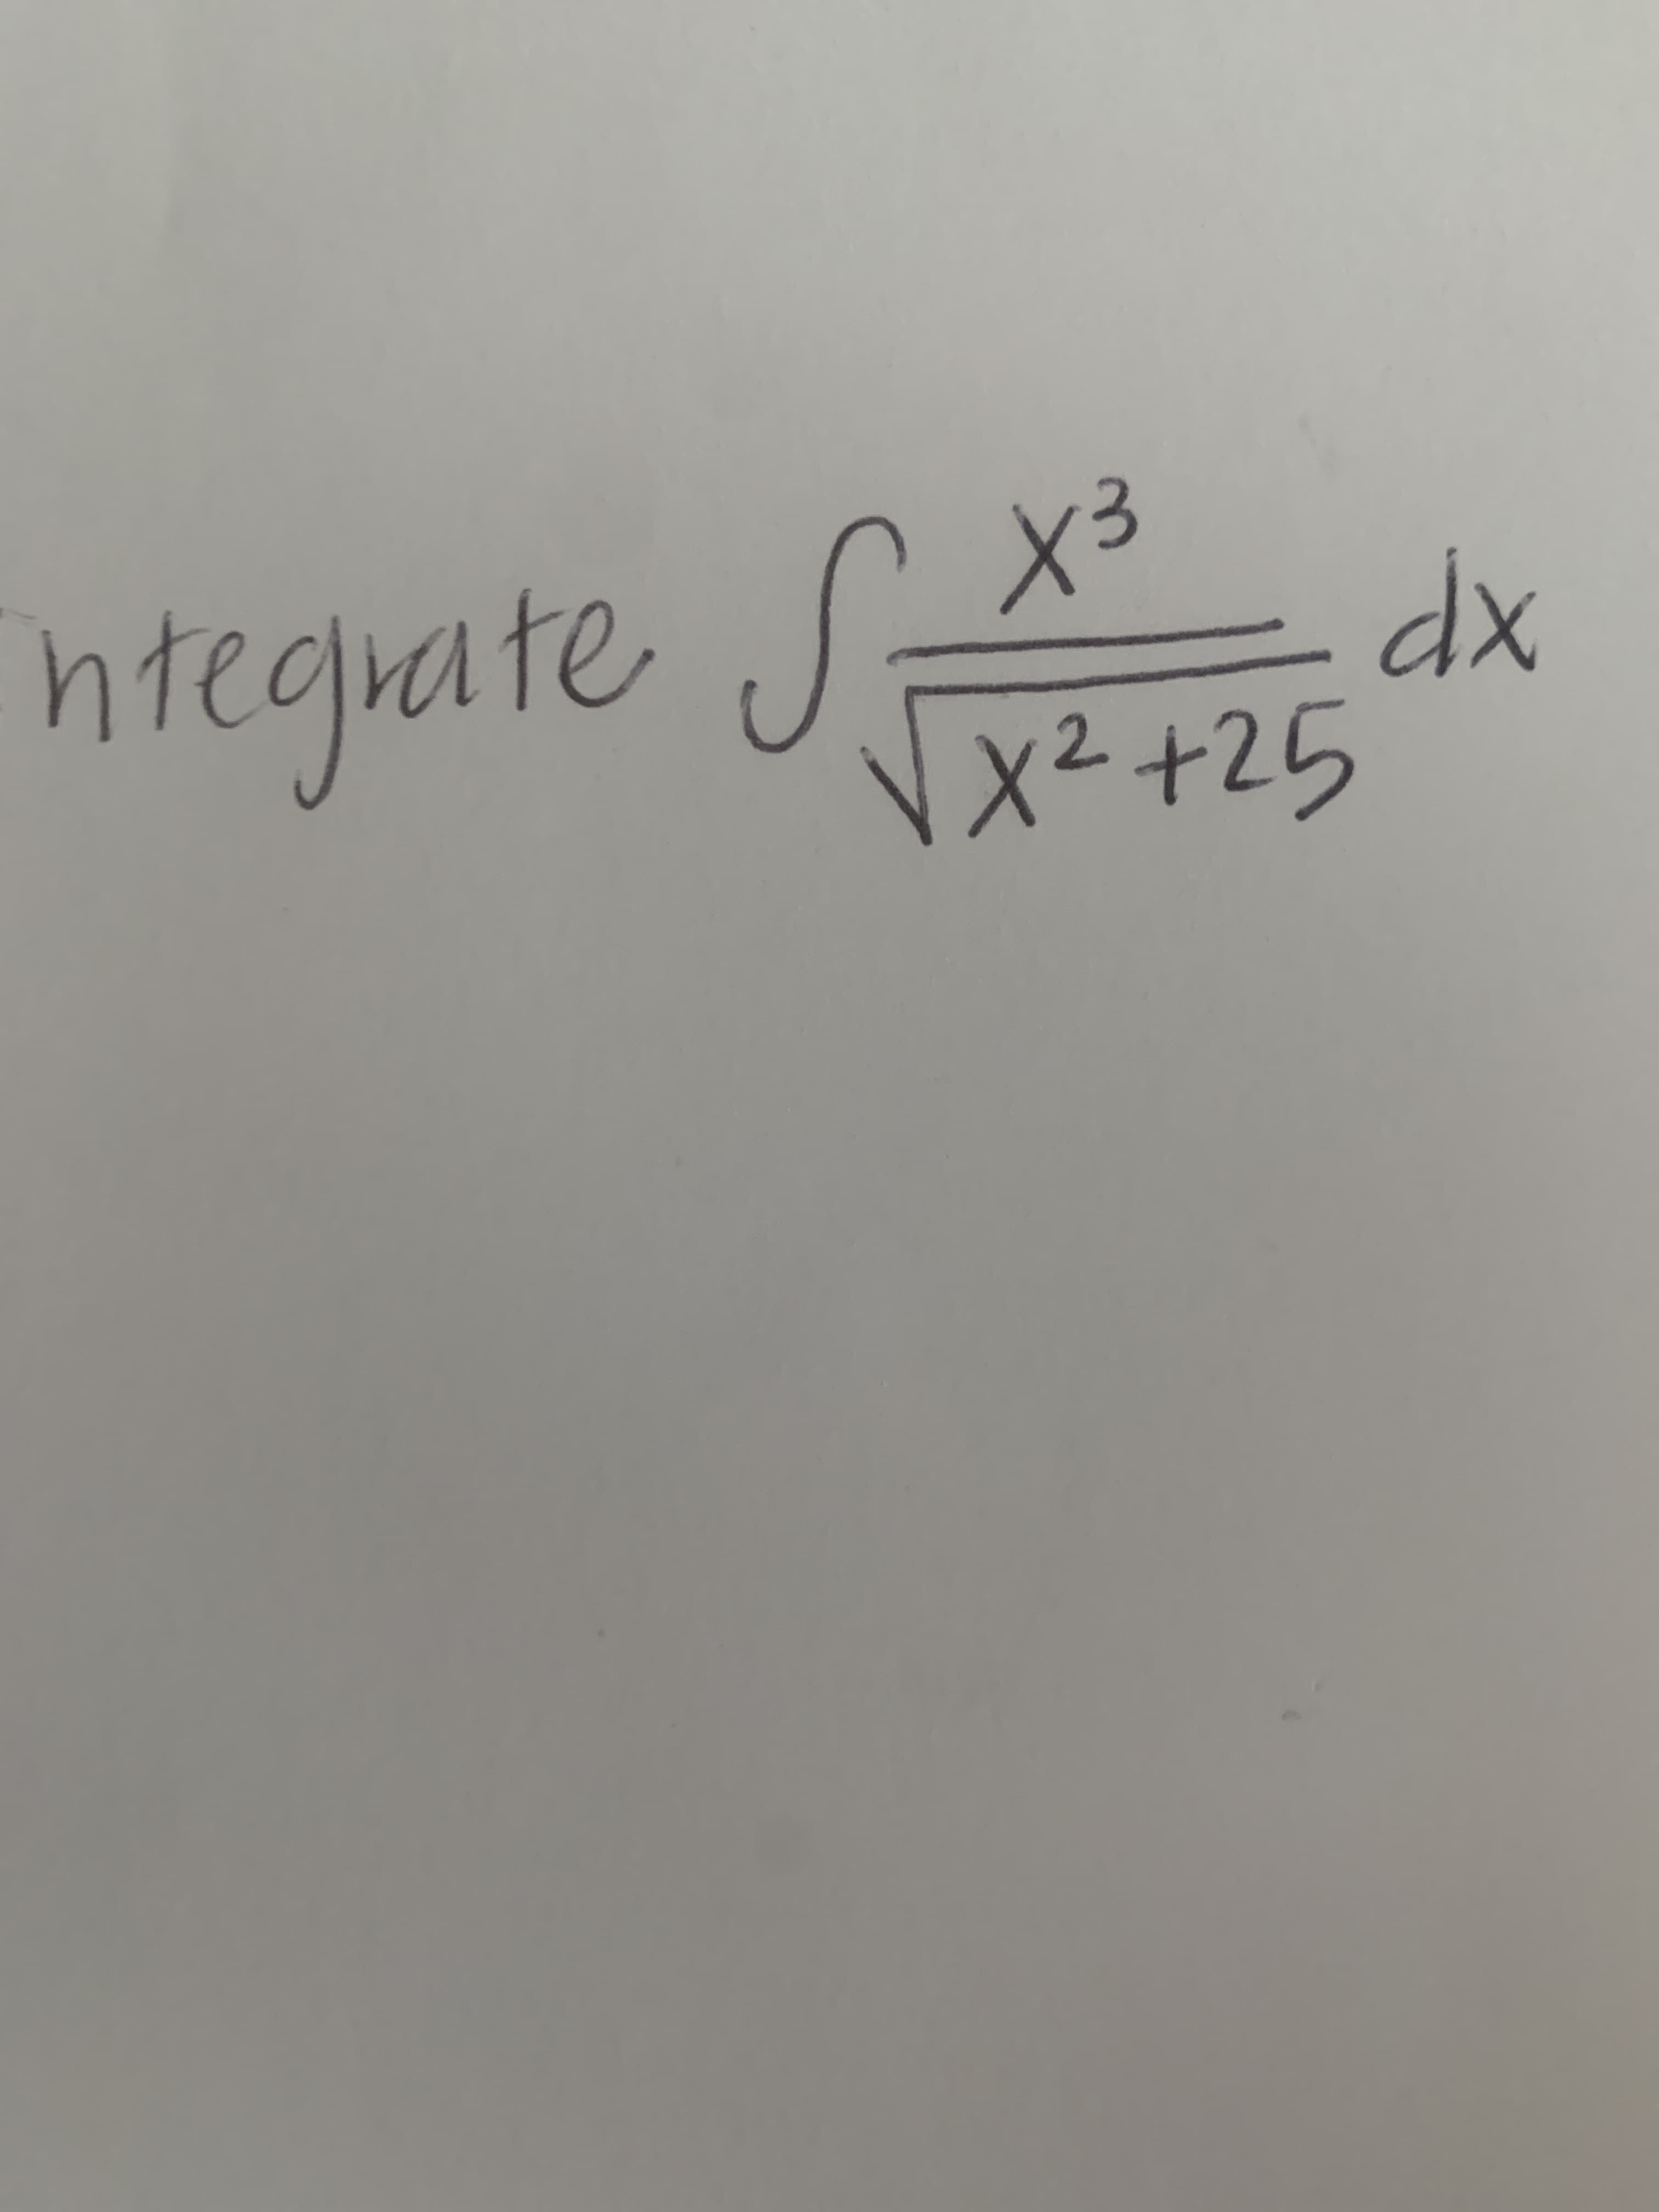 htegrate S
dx
x²+25
